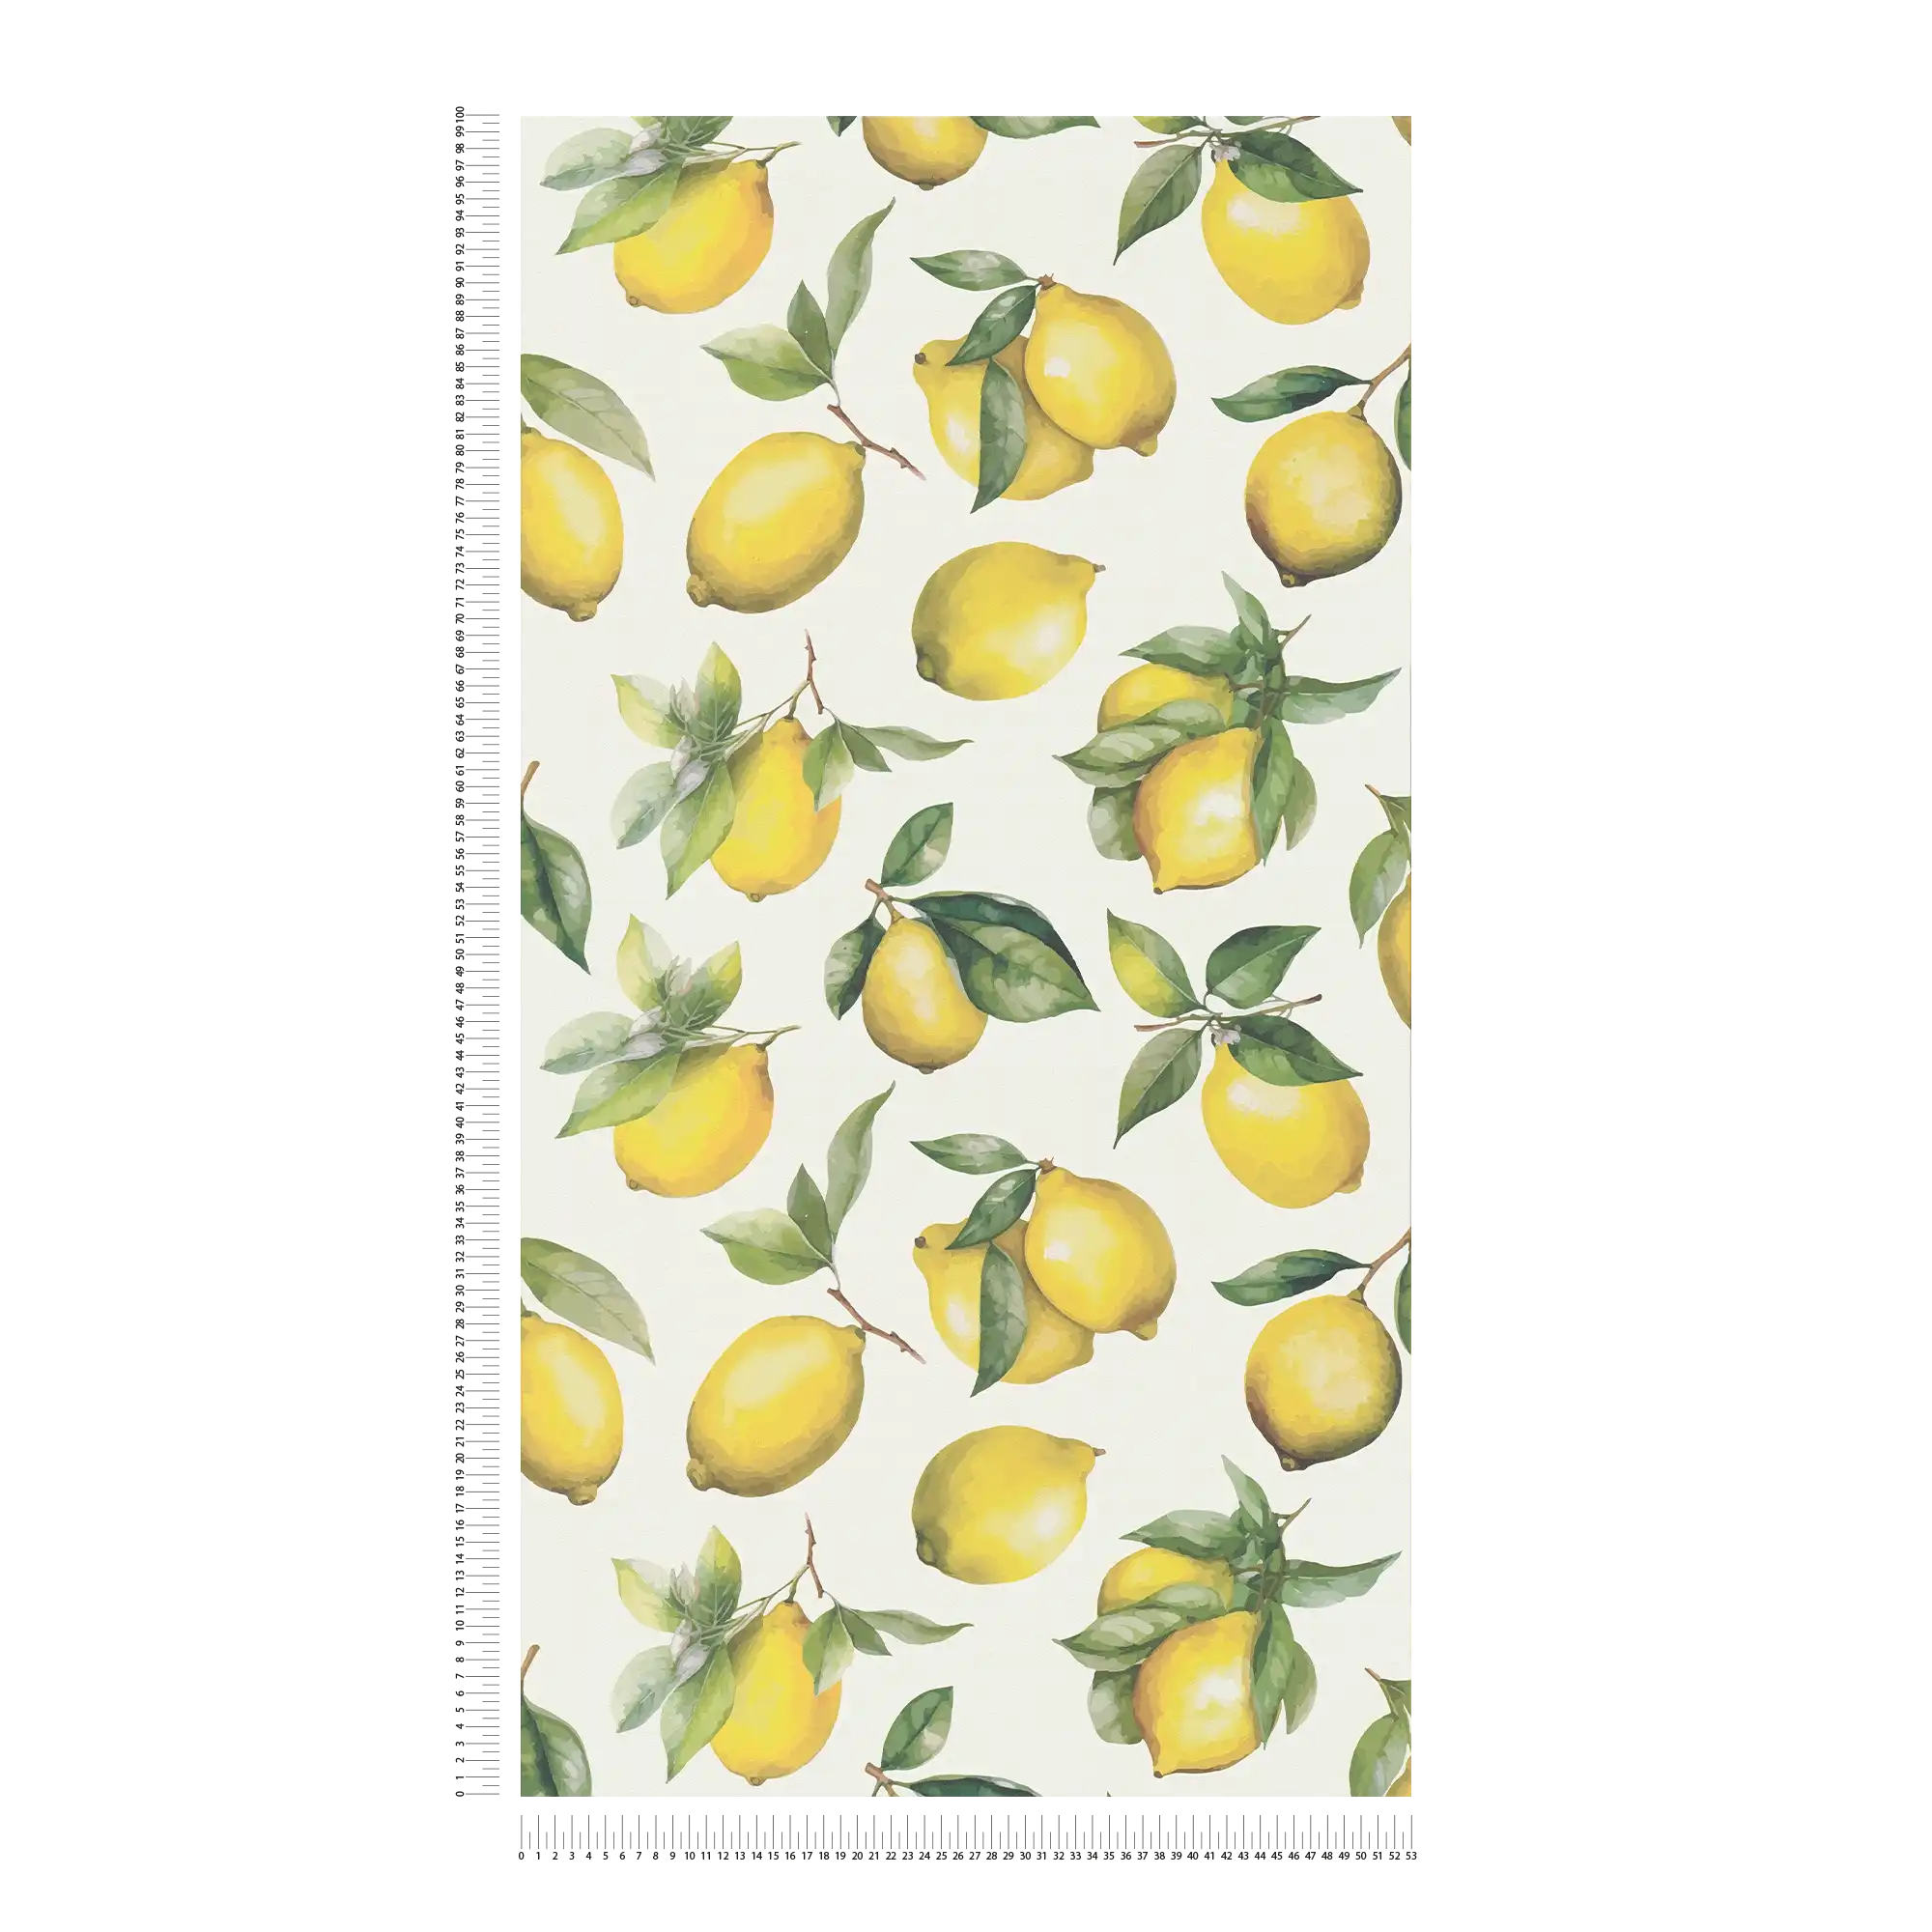             Non-woven wallpaper with painted lemon motif - white, yellow, green
        